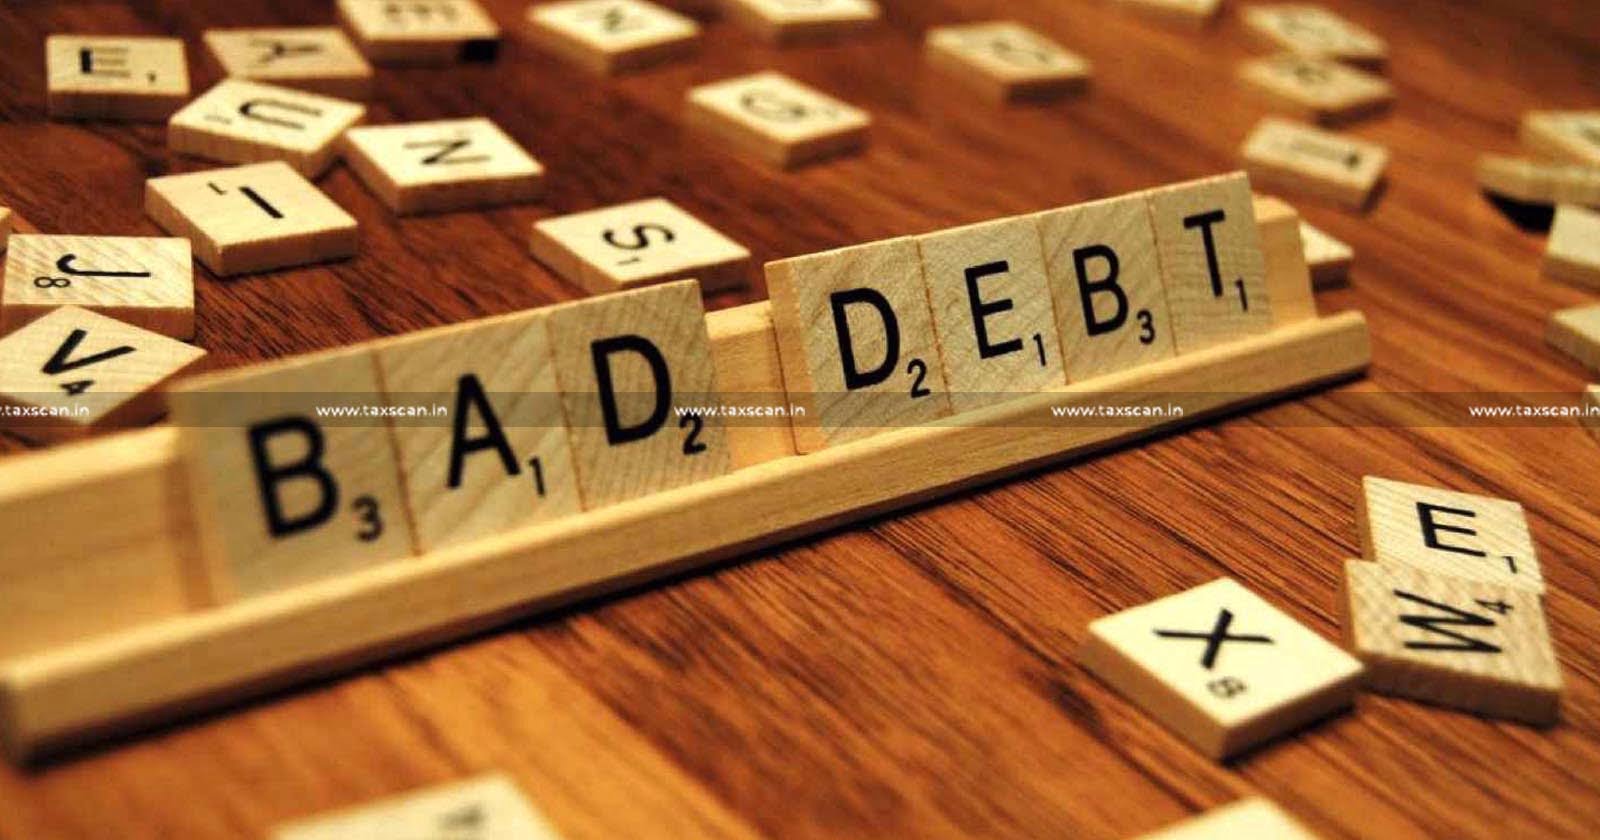 Shortage - Principal in Lending Business - Lending Business - Bad Debt - ITAT - Taxscan